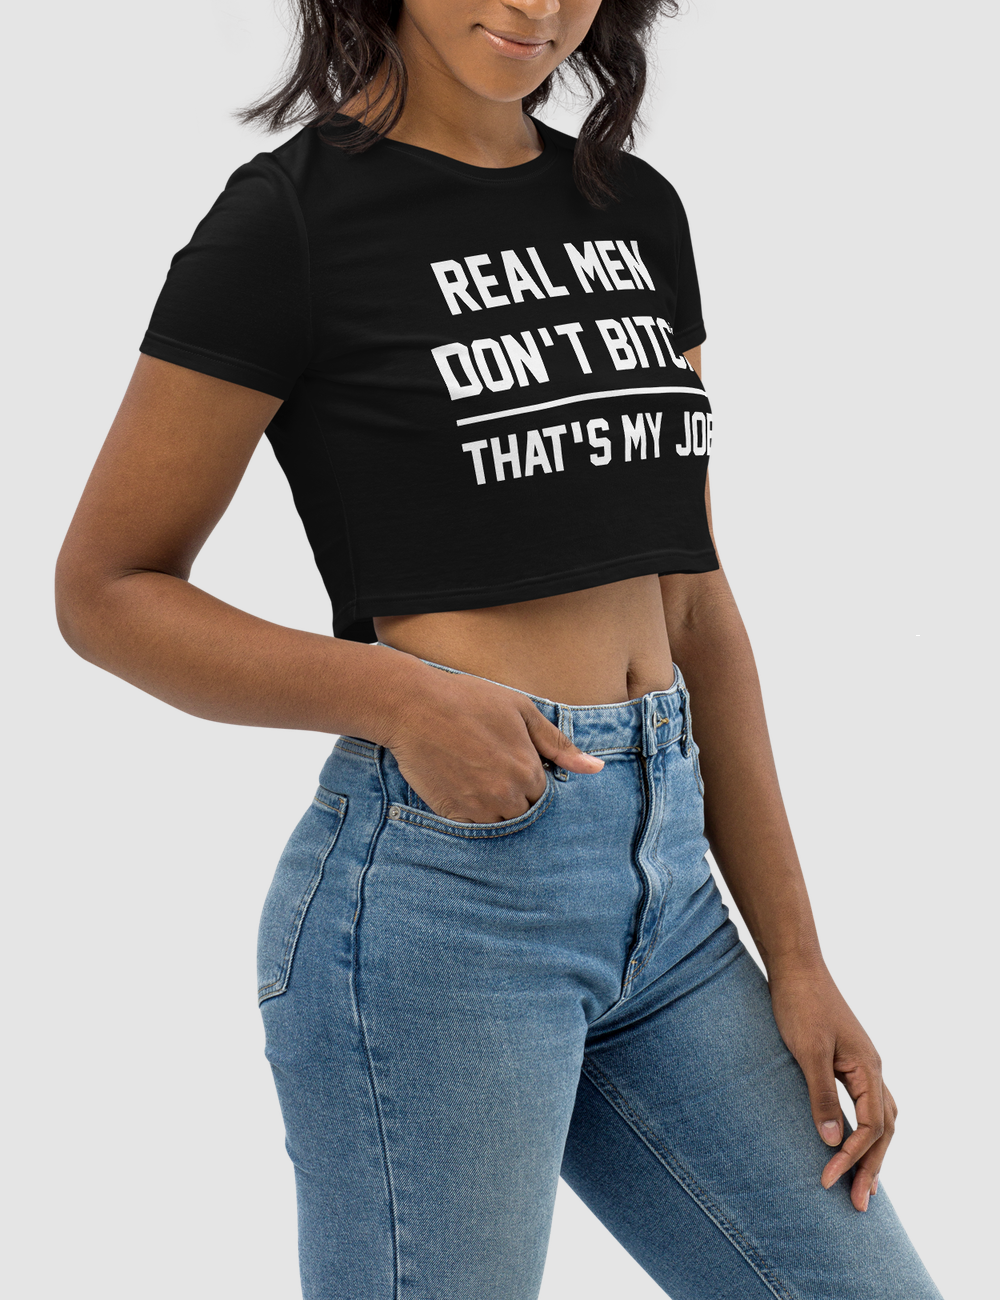 Real Men Don't Bitch Women's Fitted Crop Top T-Shirt OniTakai